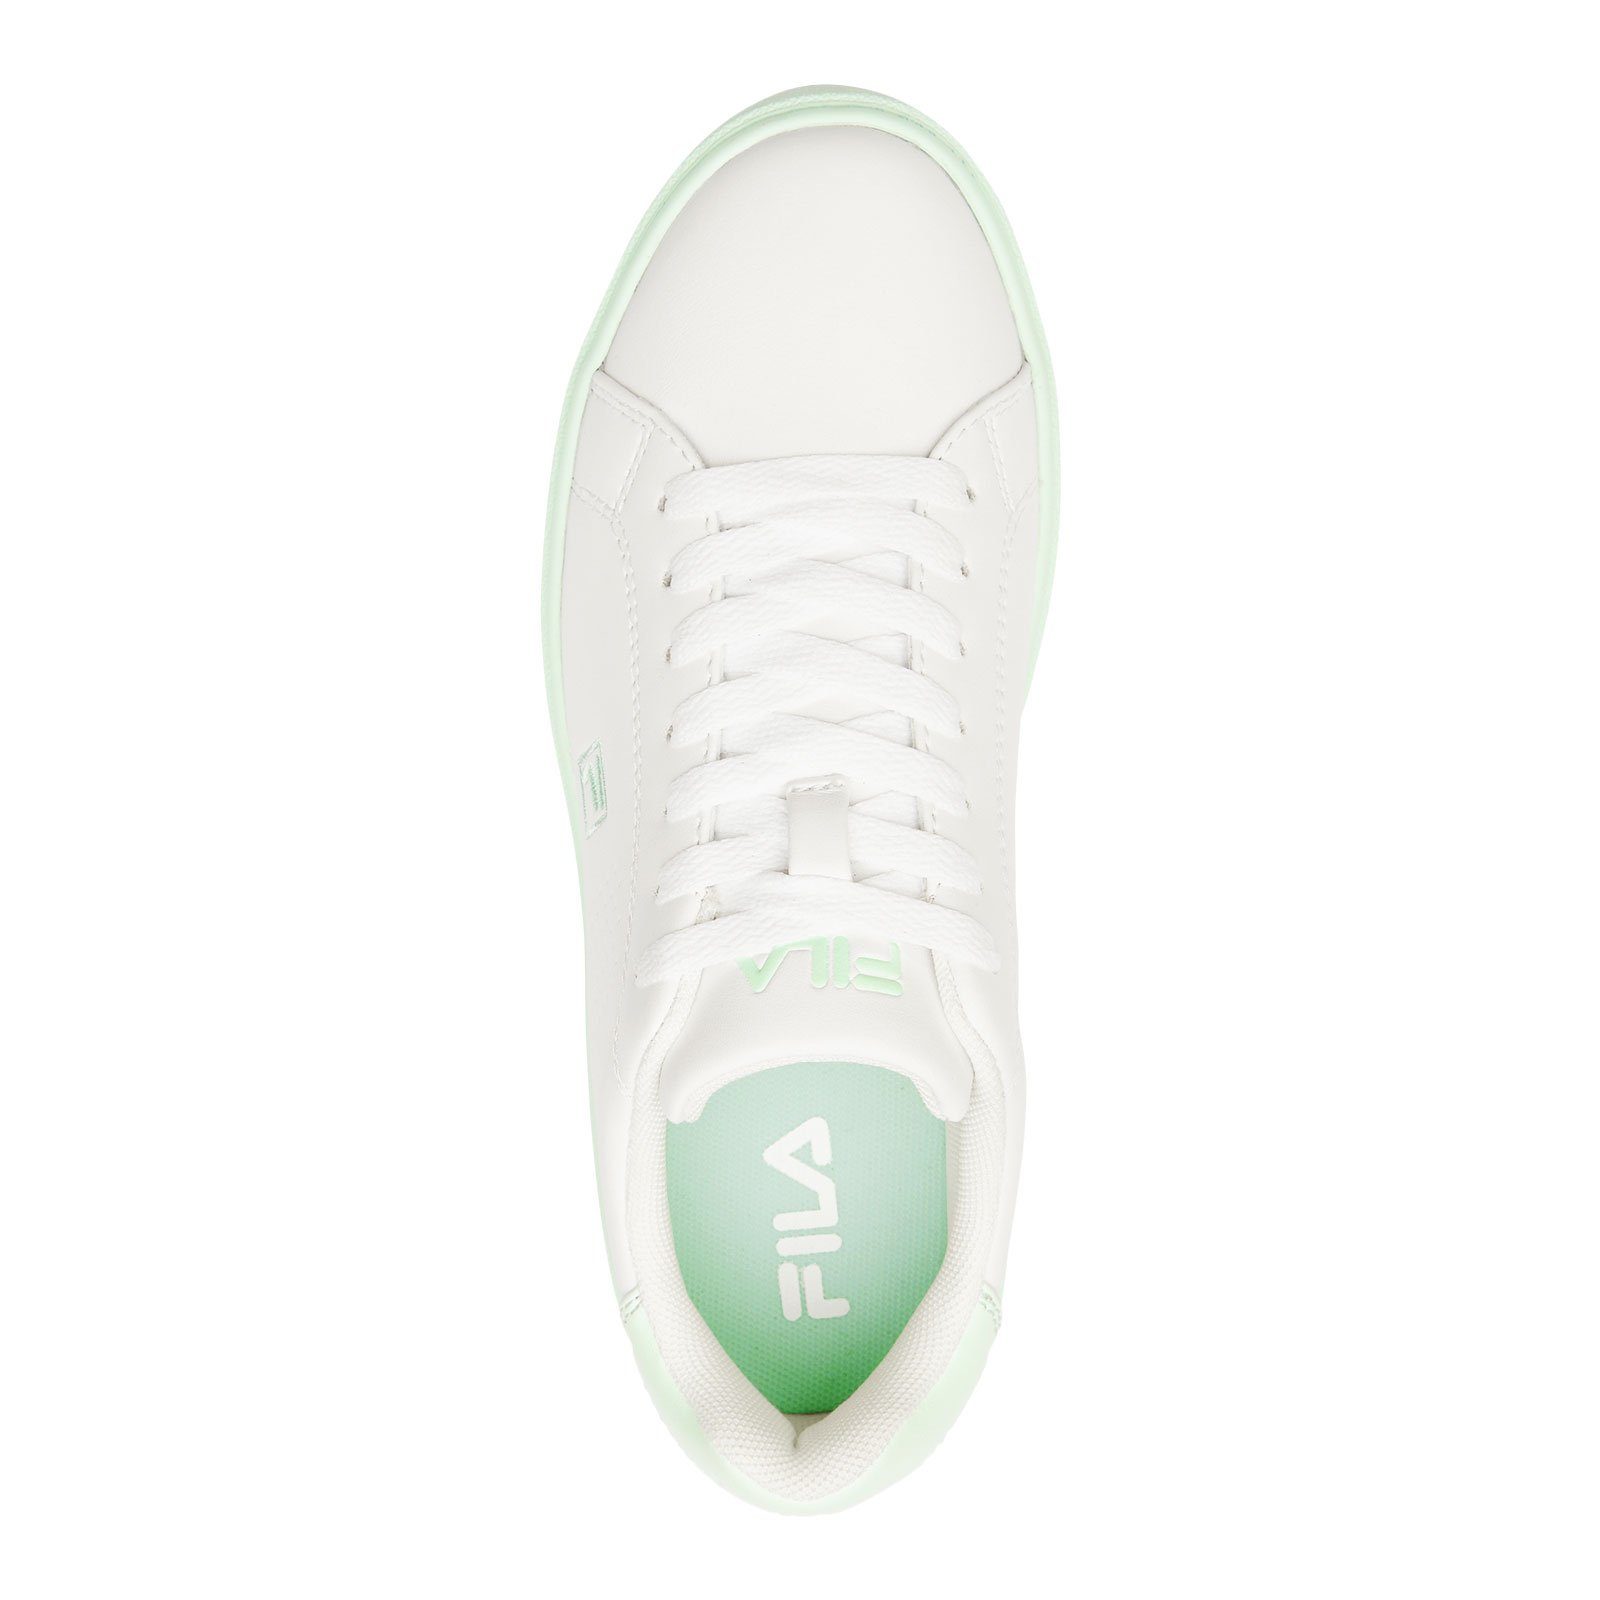 Fila Damen Akzenten zarten / 94W Pastellfarben mit und Sneaker Plateausohle white in bay